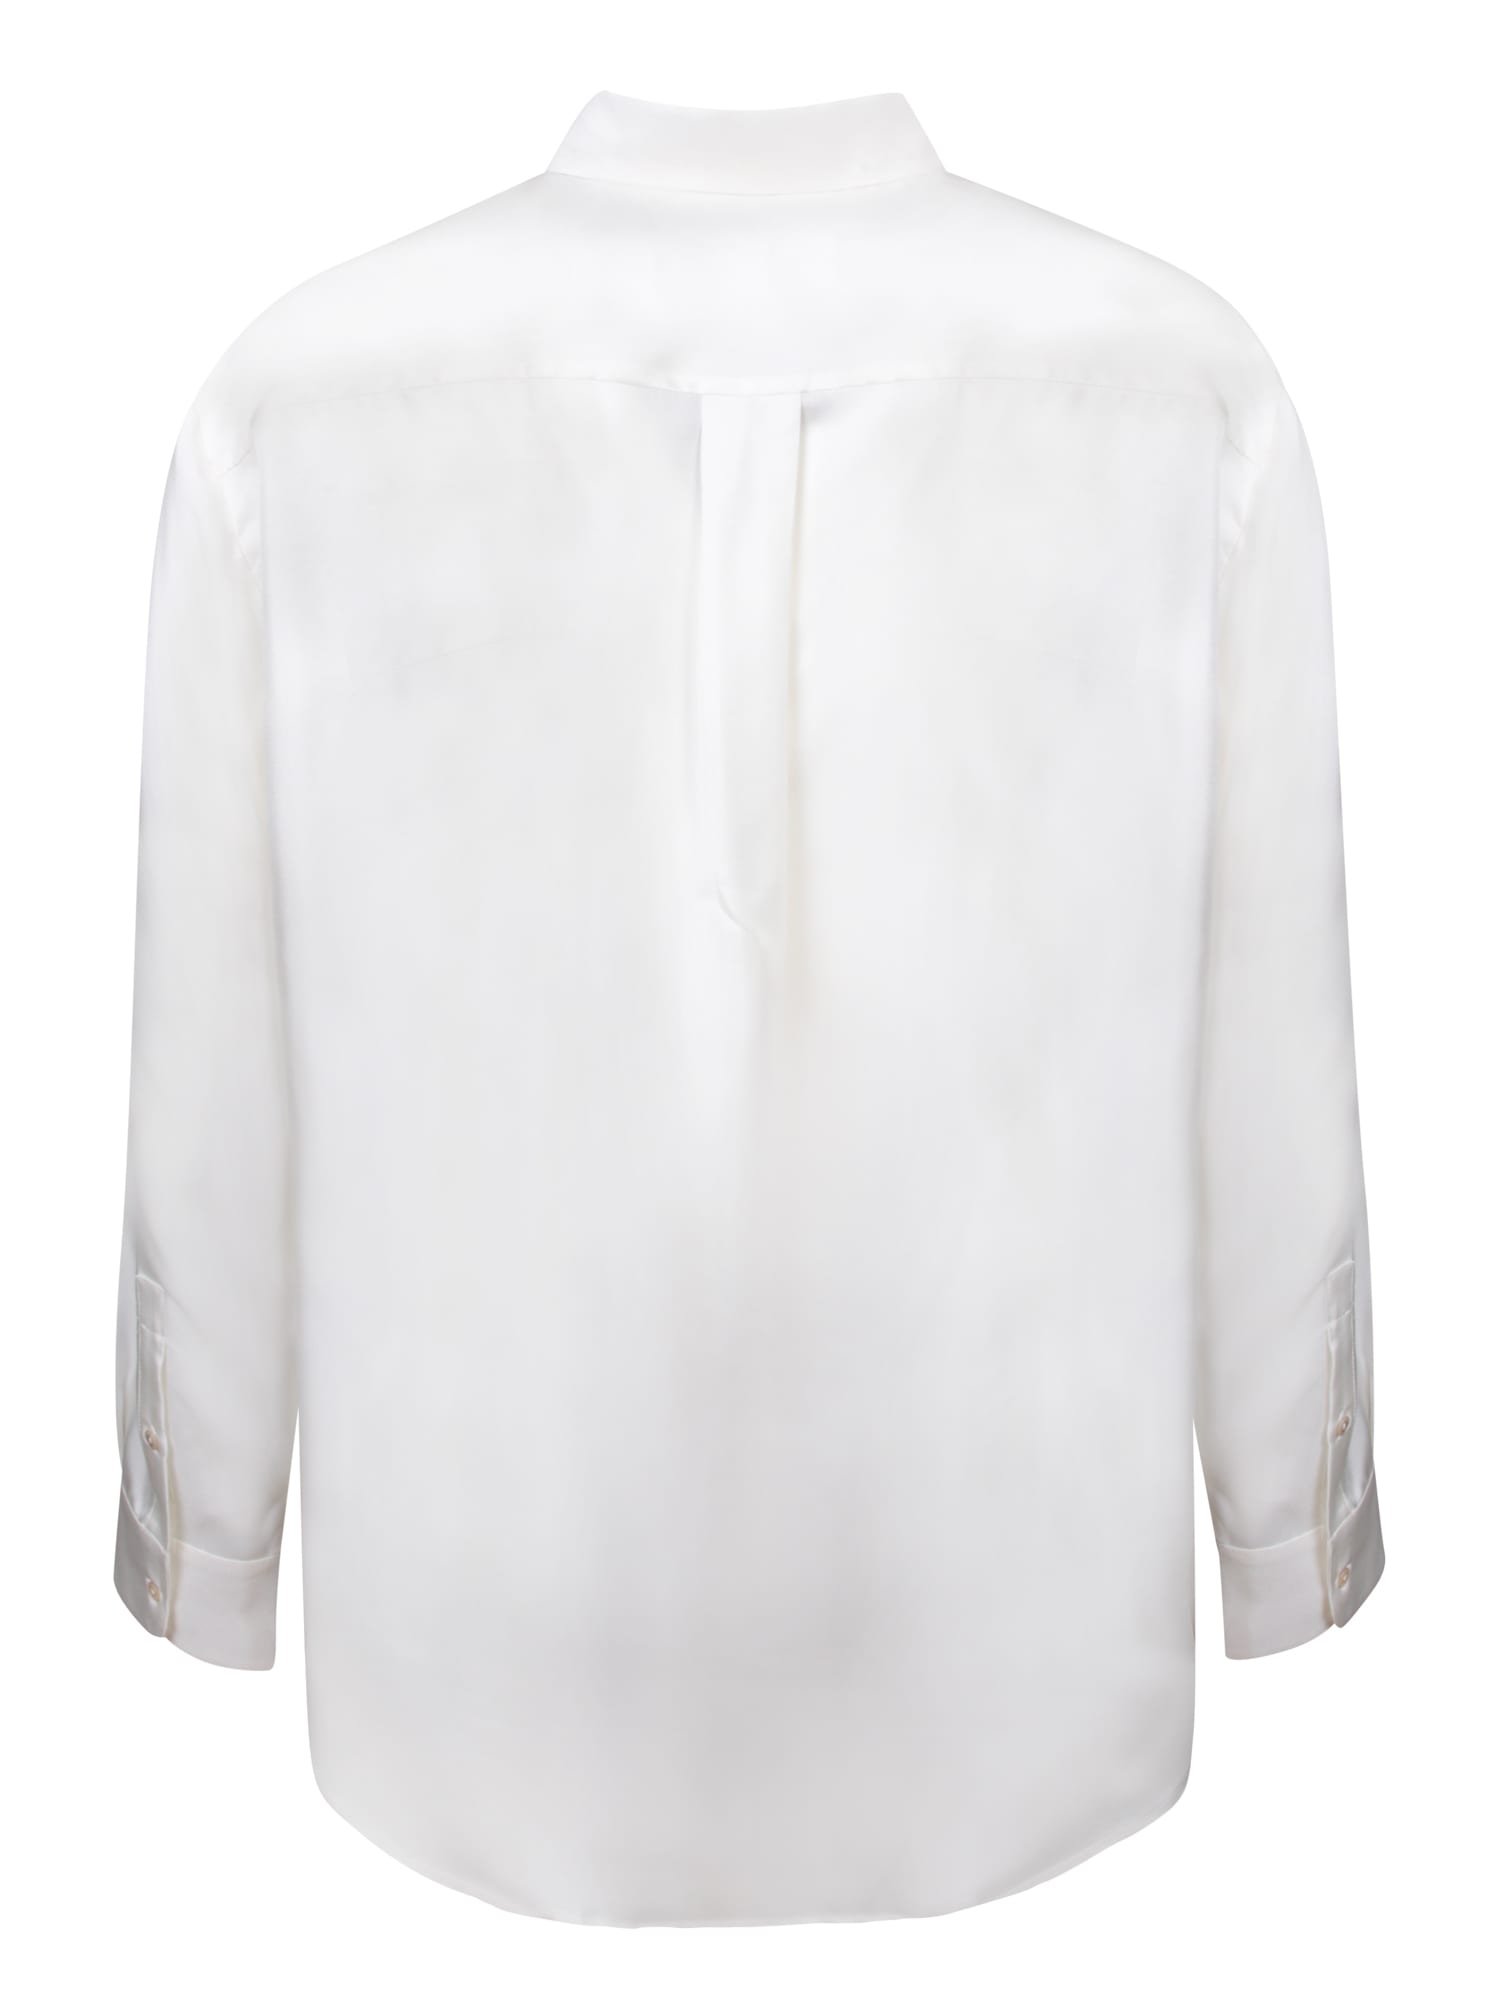 Shop Pierre-louis Mascia Aloe Organic White/multicolor Shirt